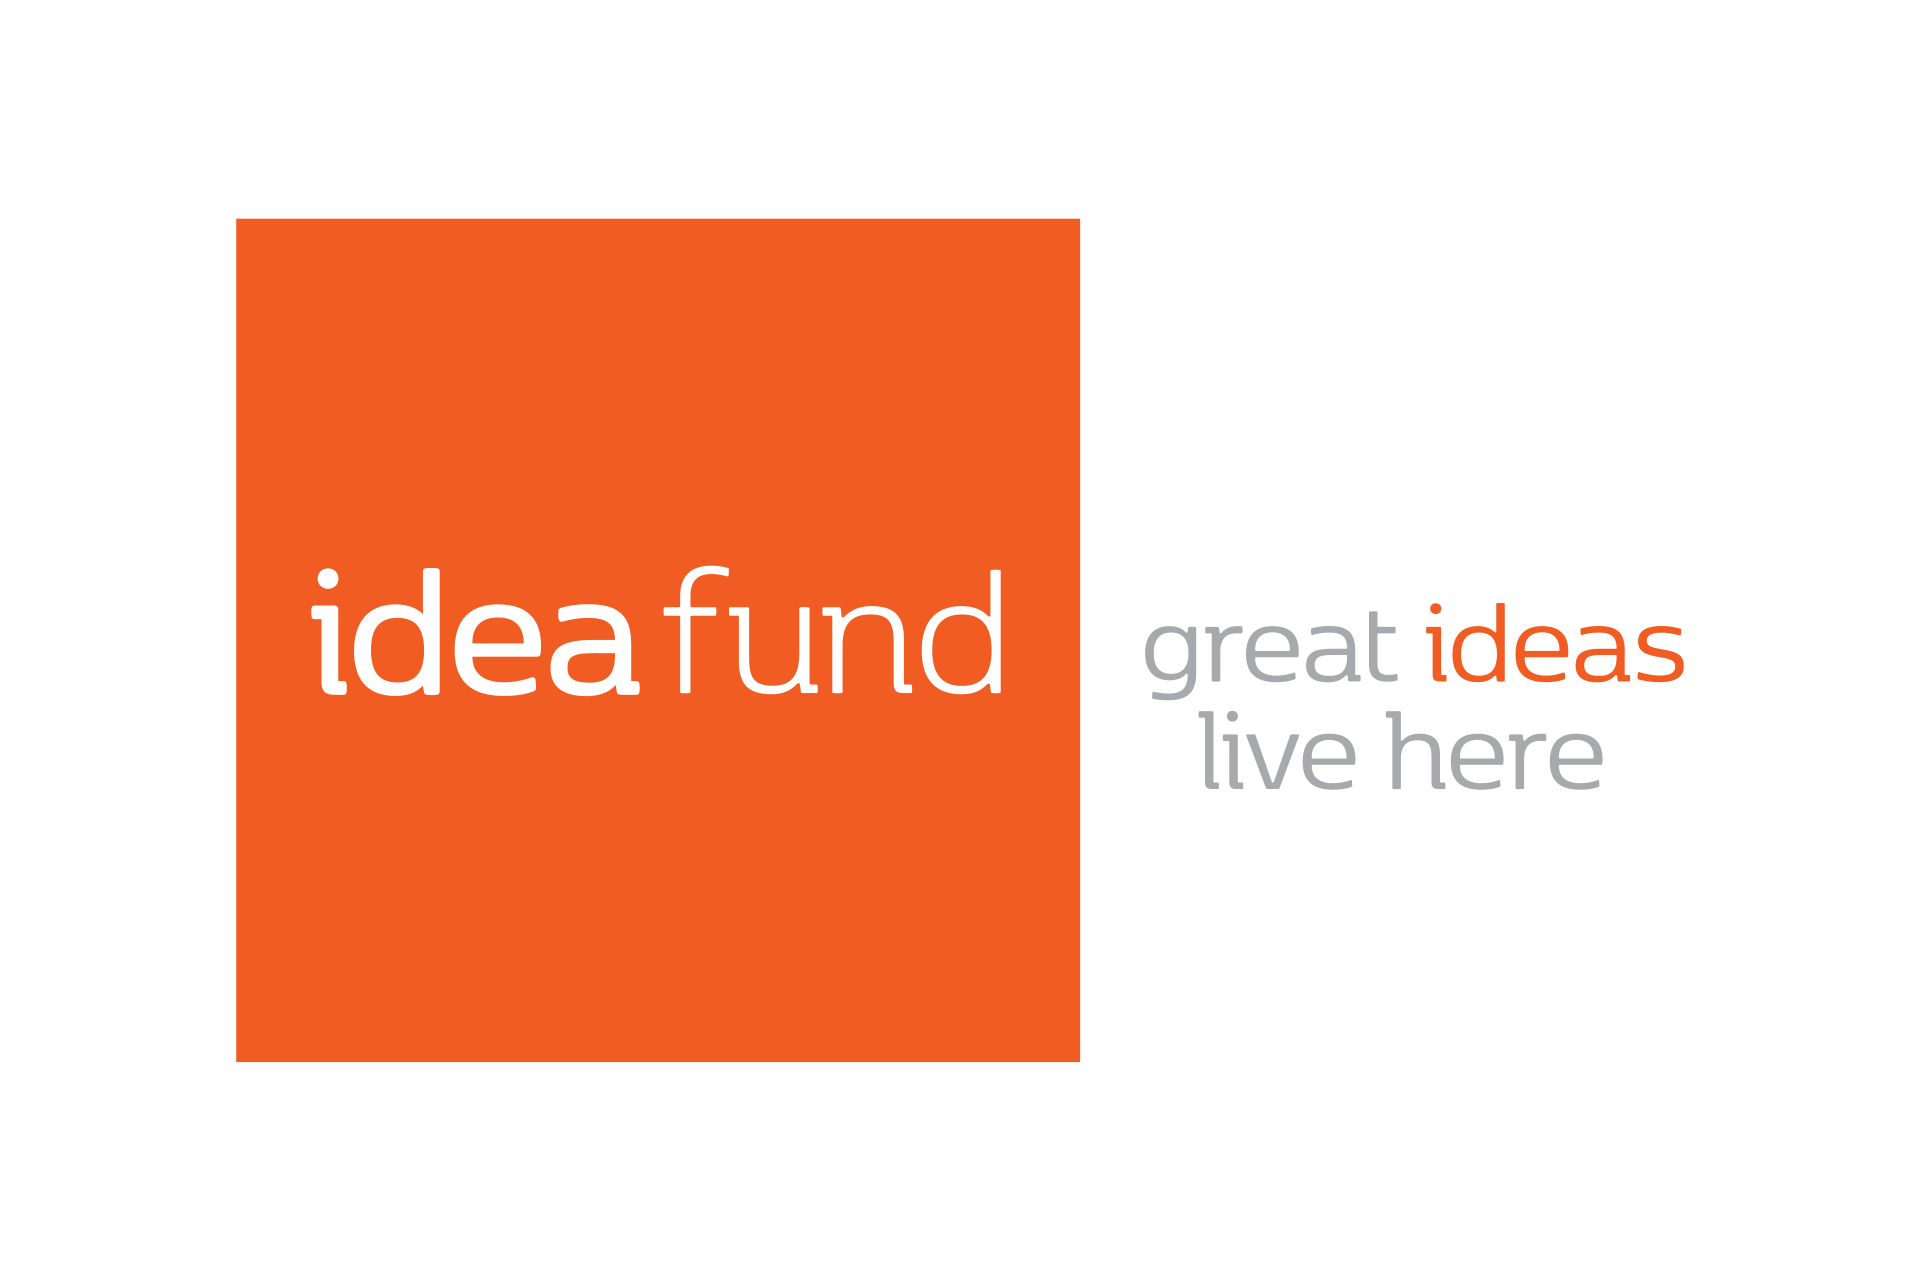 Idea Fund logo